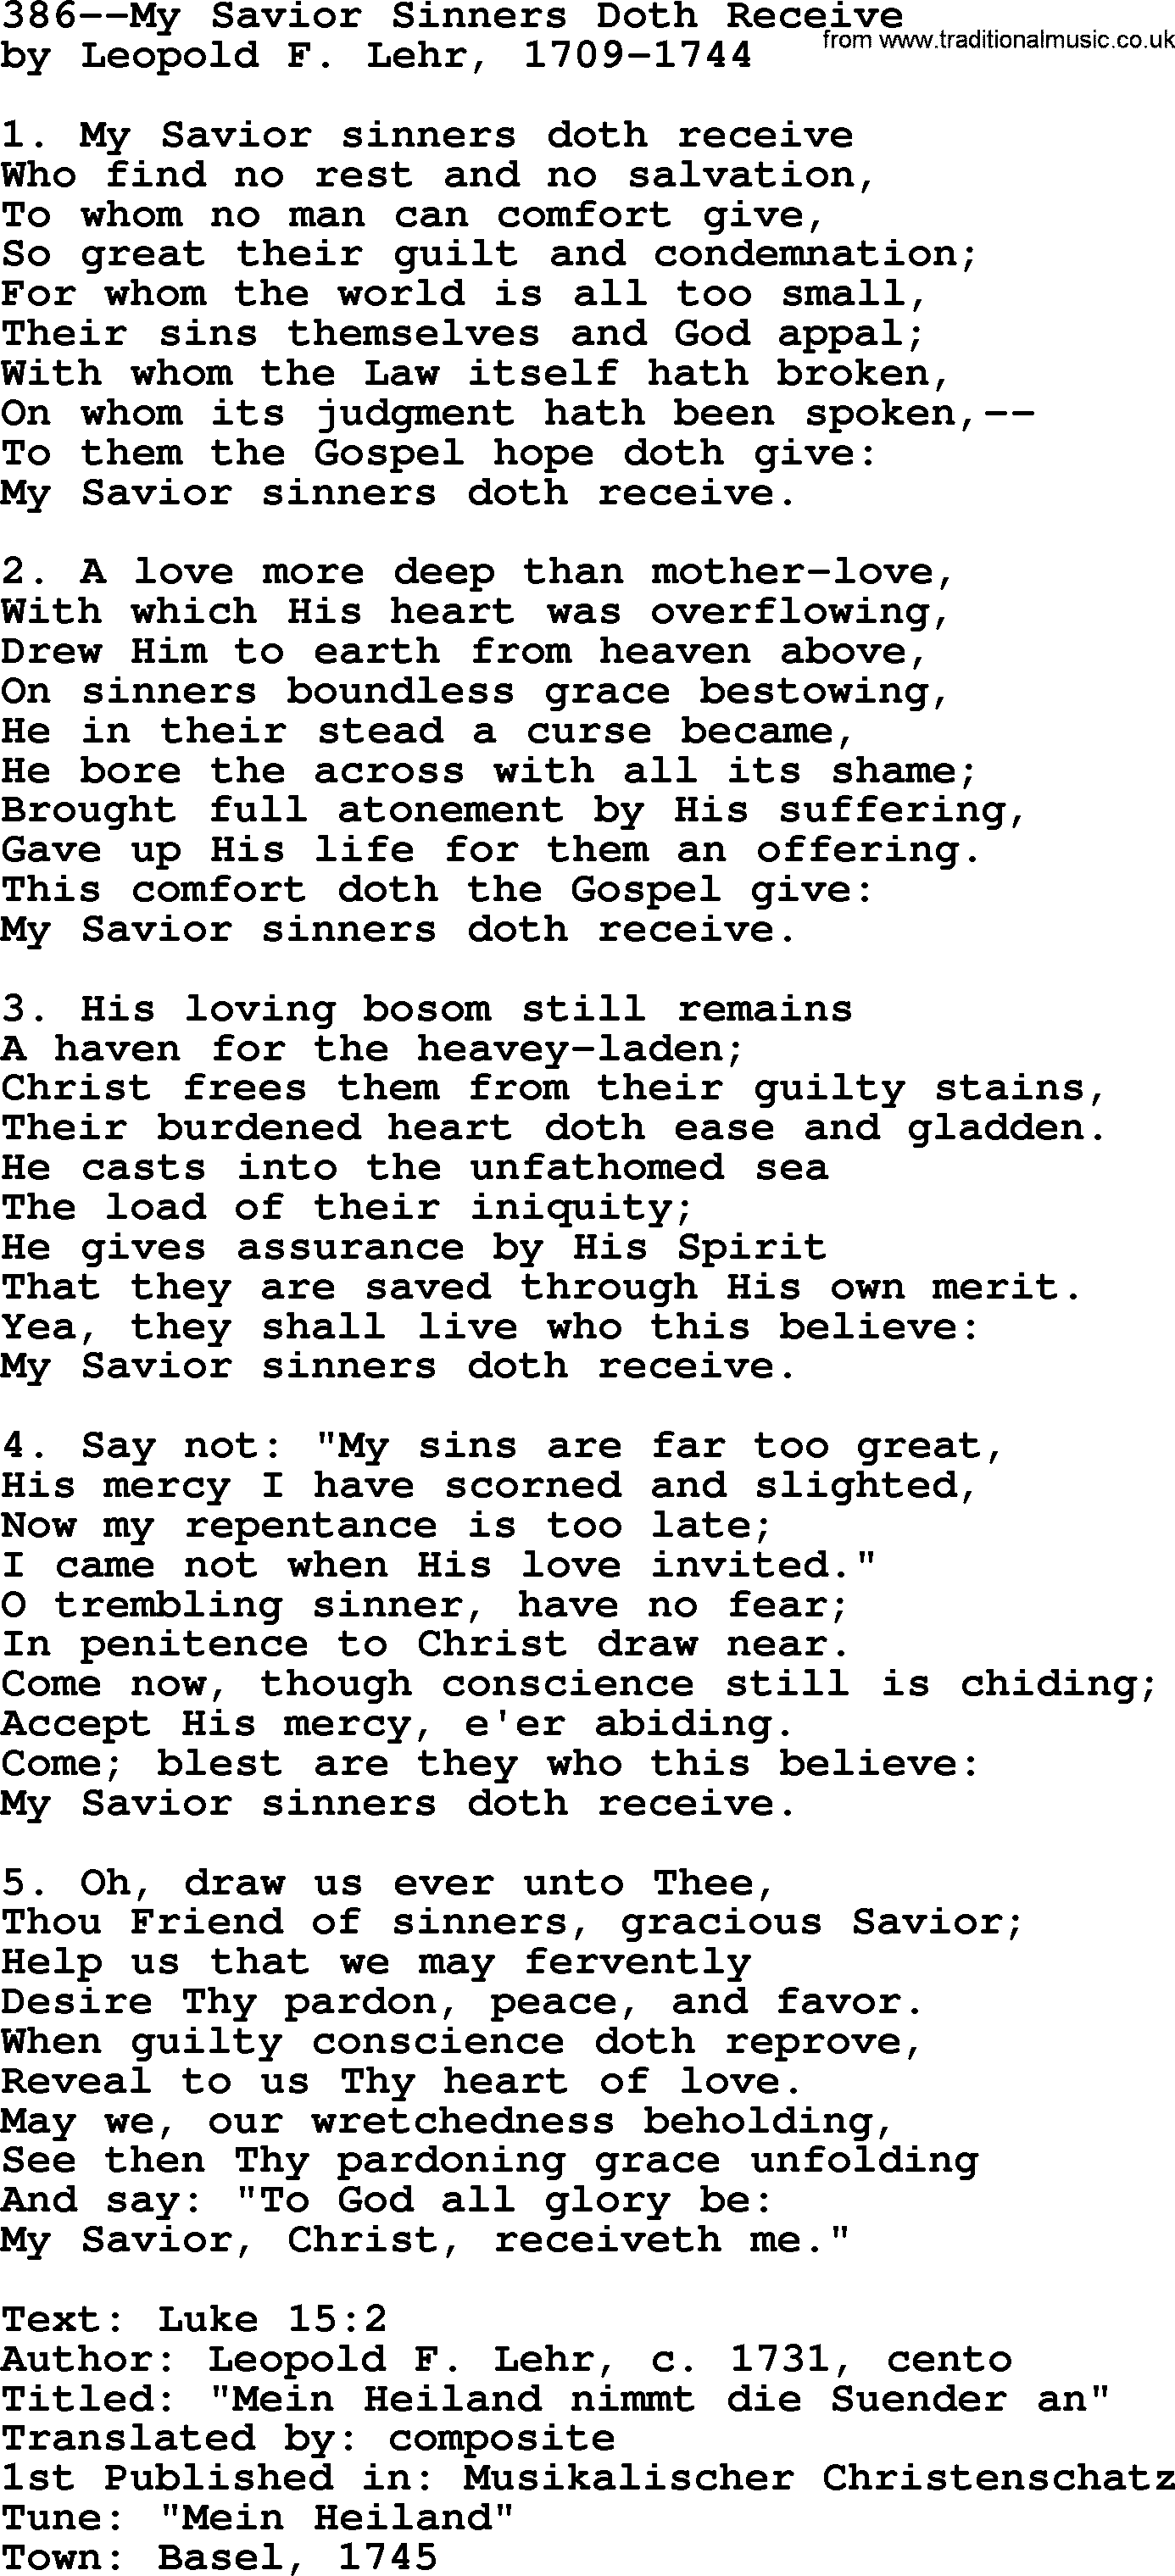 Lutheran Hymn: 386--My Savior Sinners Doth Receive.txt lyrics with PDF